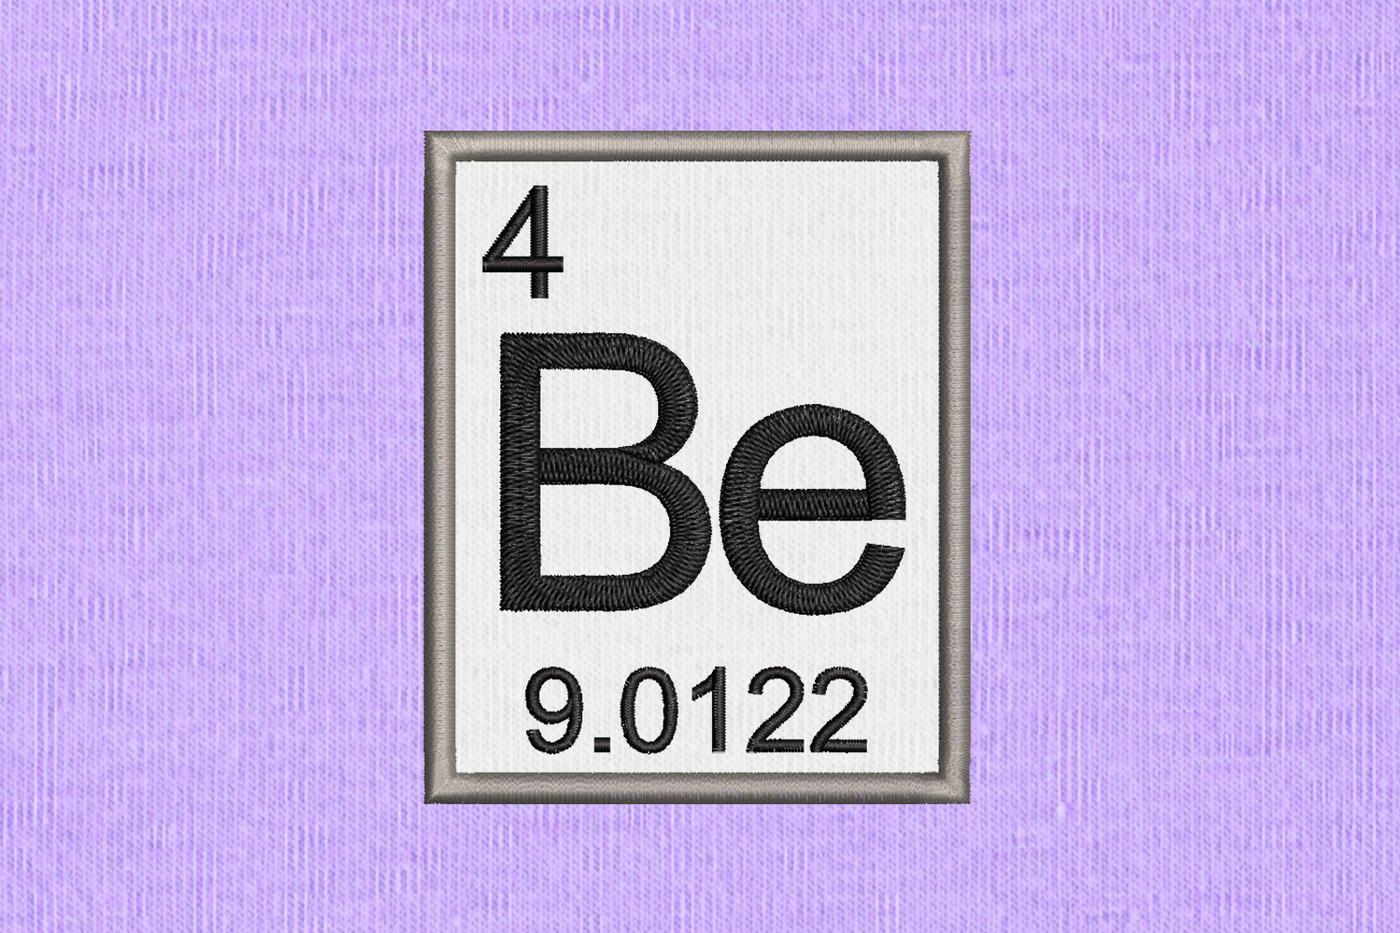 Applique design for the chemical element information for beryllium 